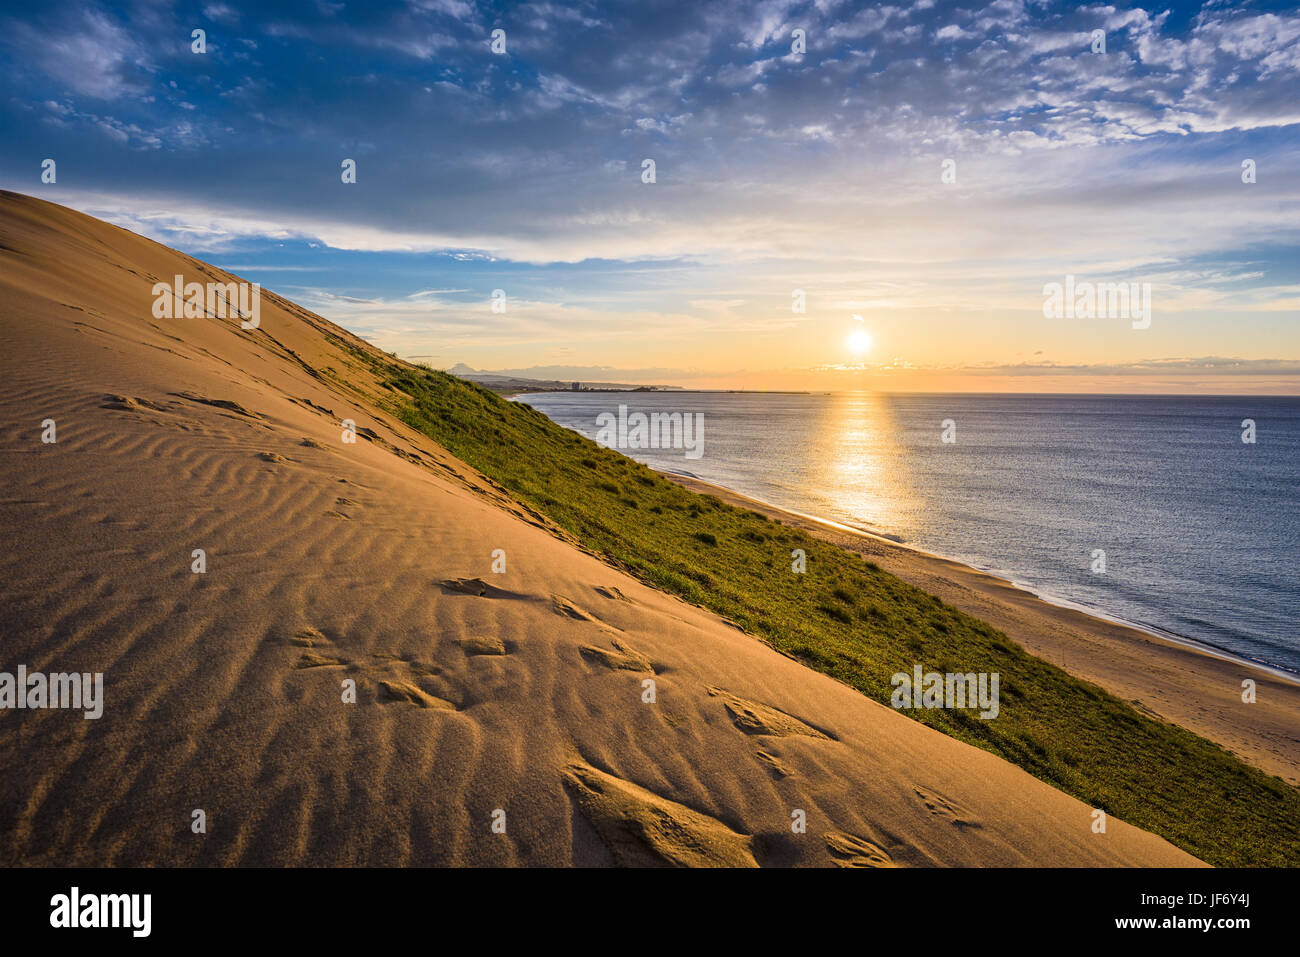 Tottori, Japan sand dunes on the Sea of Japan. Stock Photo